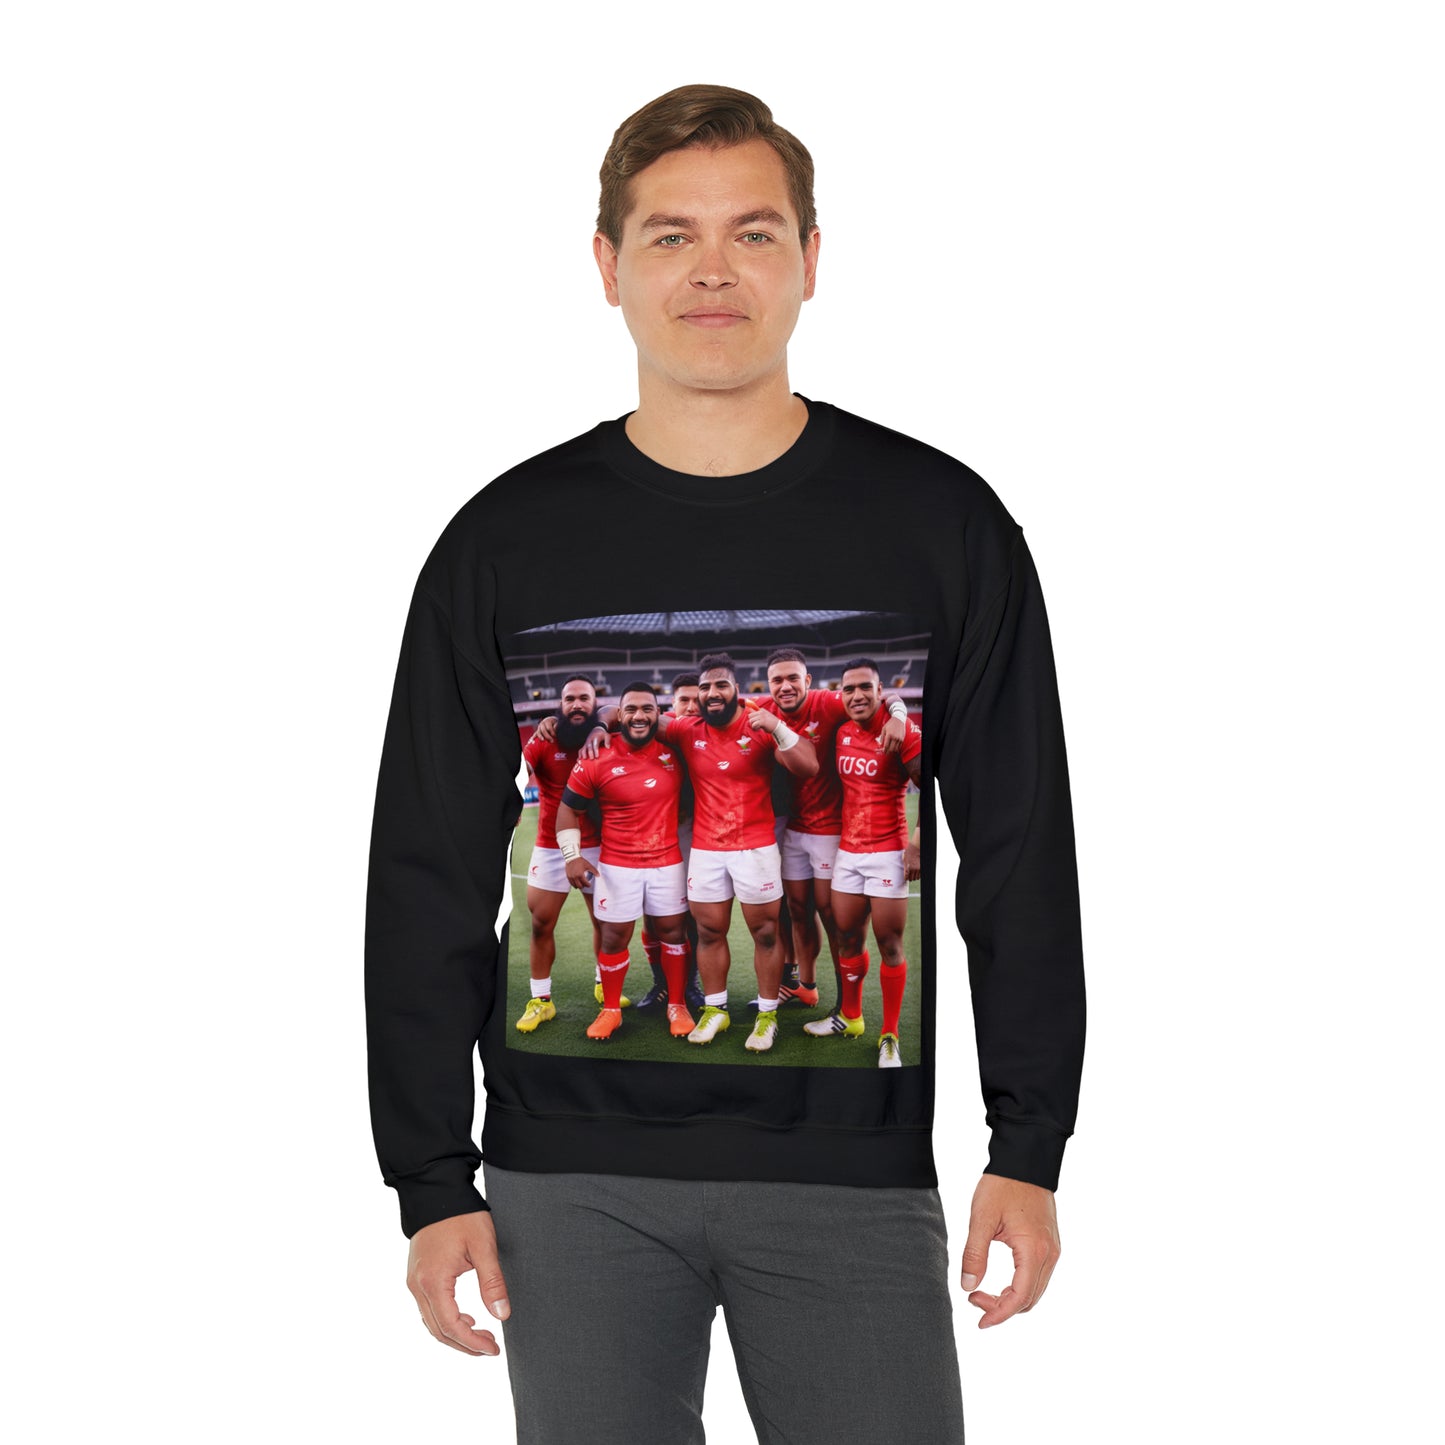 Post Match Tonga - black sweatshirt